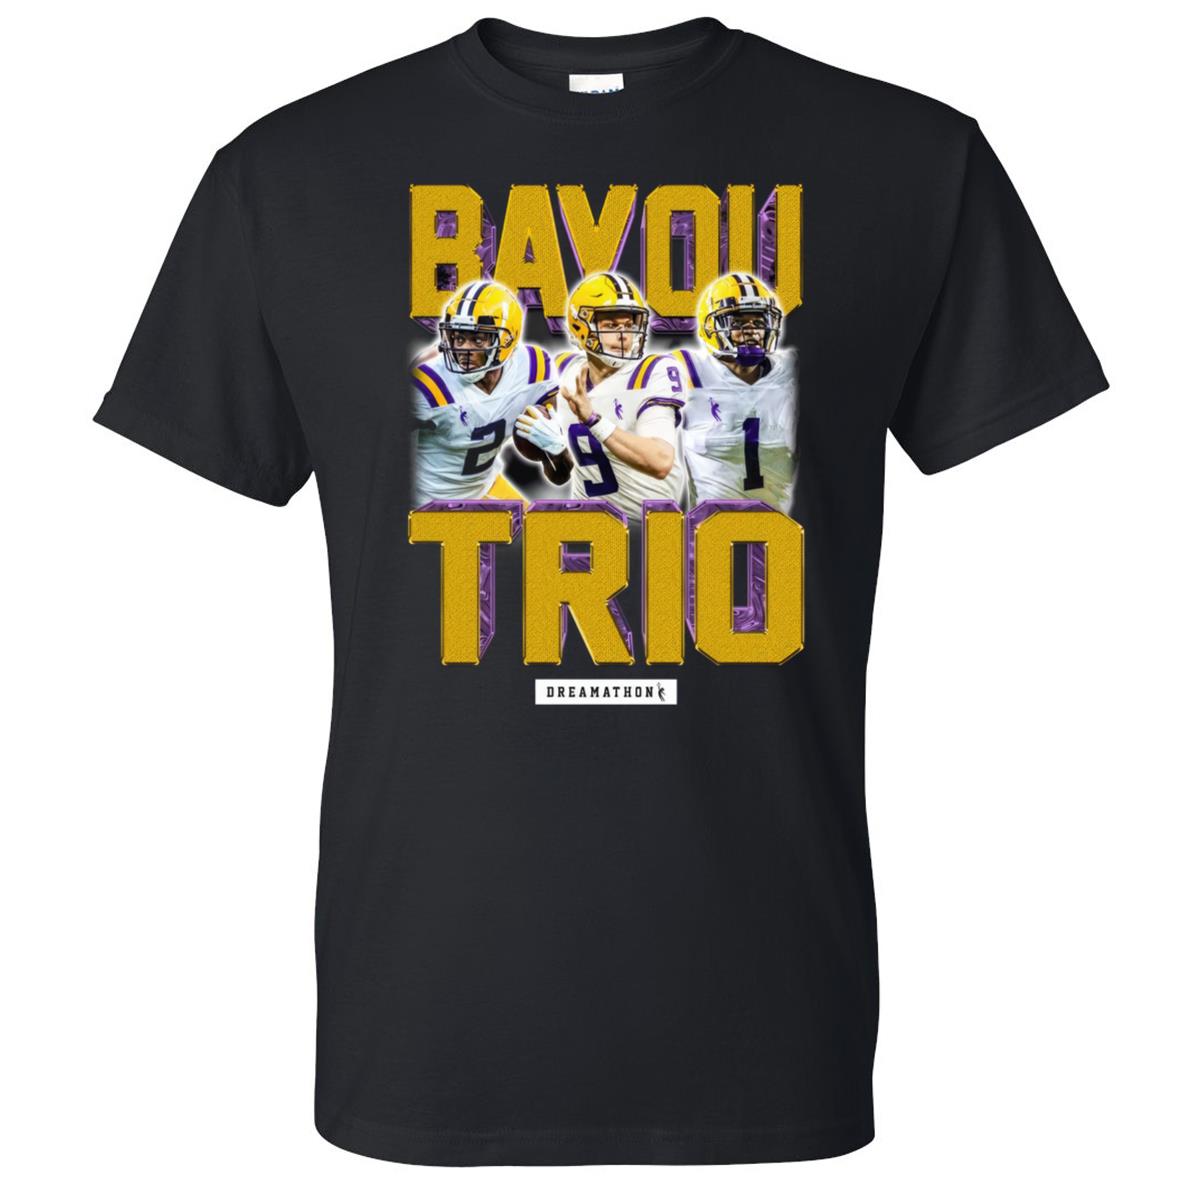 Justin Jets Jefferson Bayou Trio Dreamathon Shirt